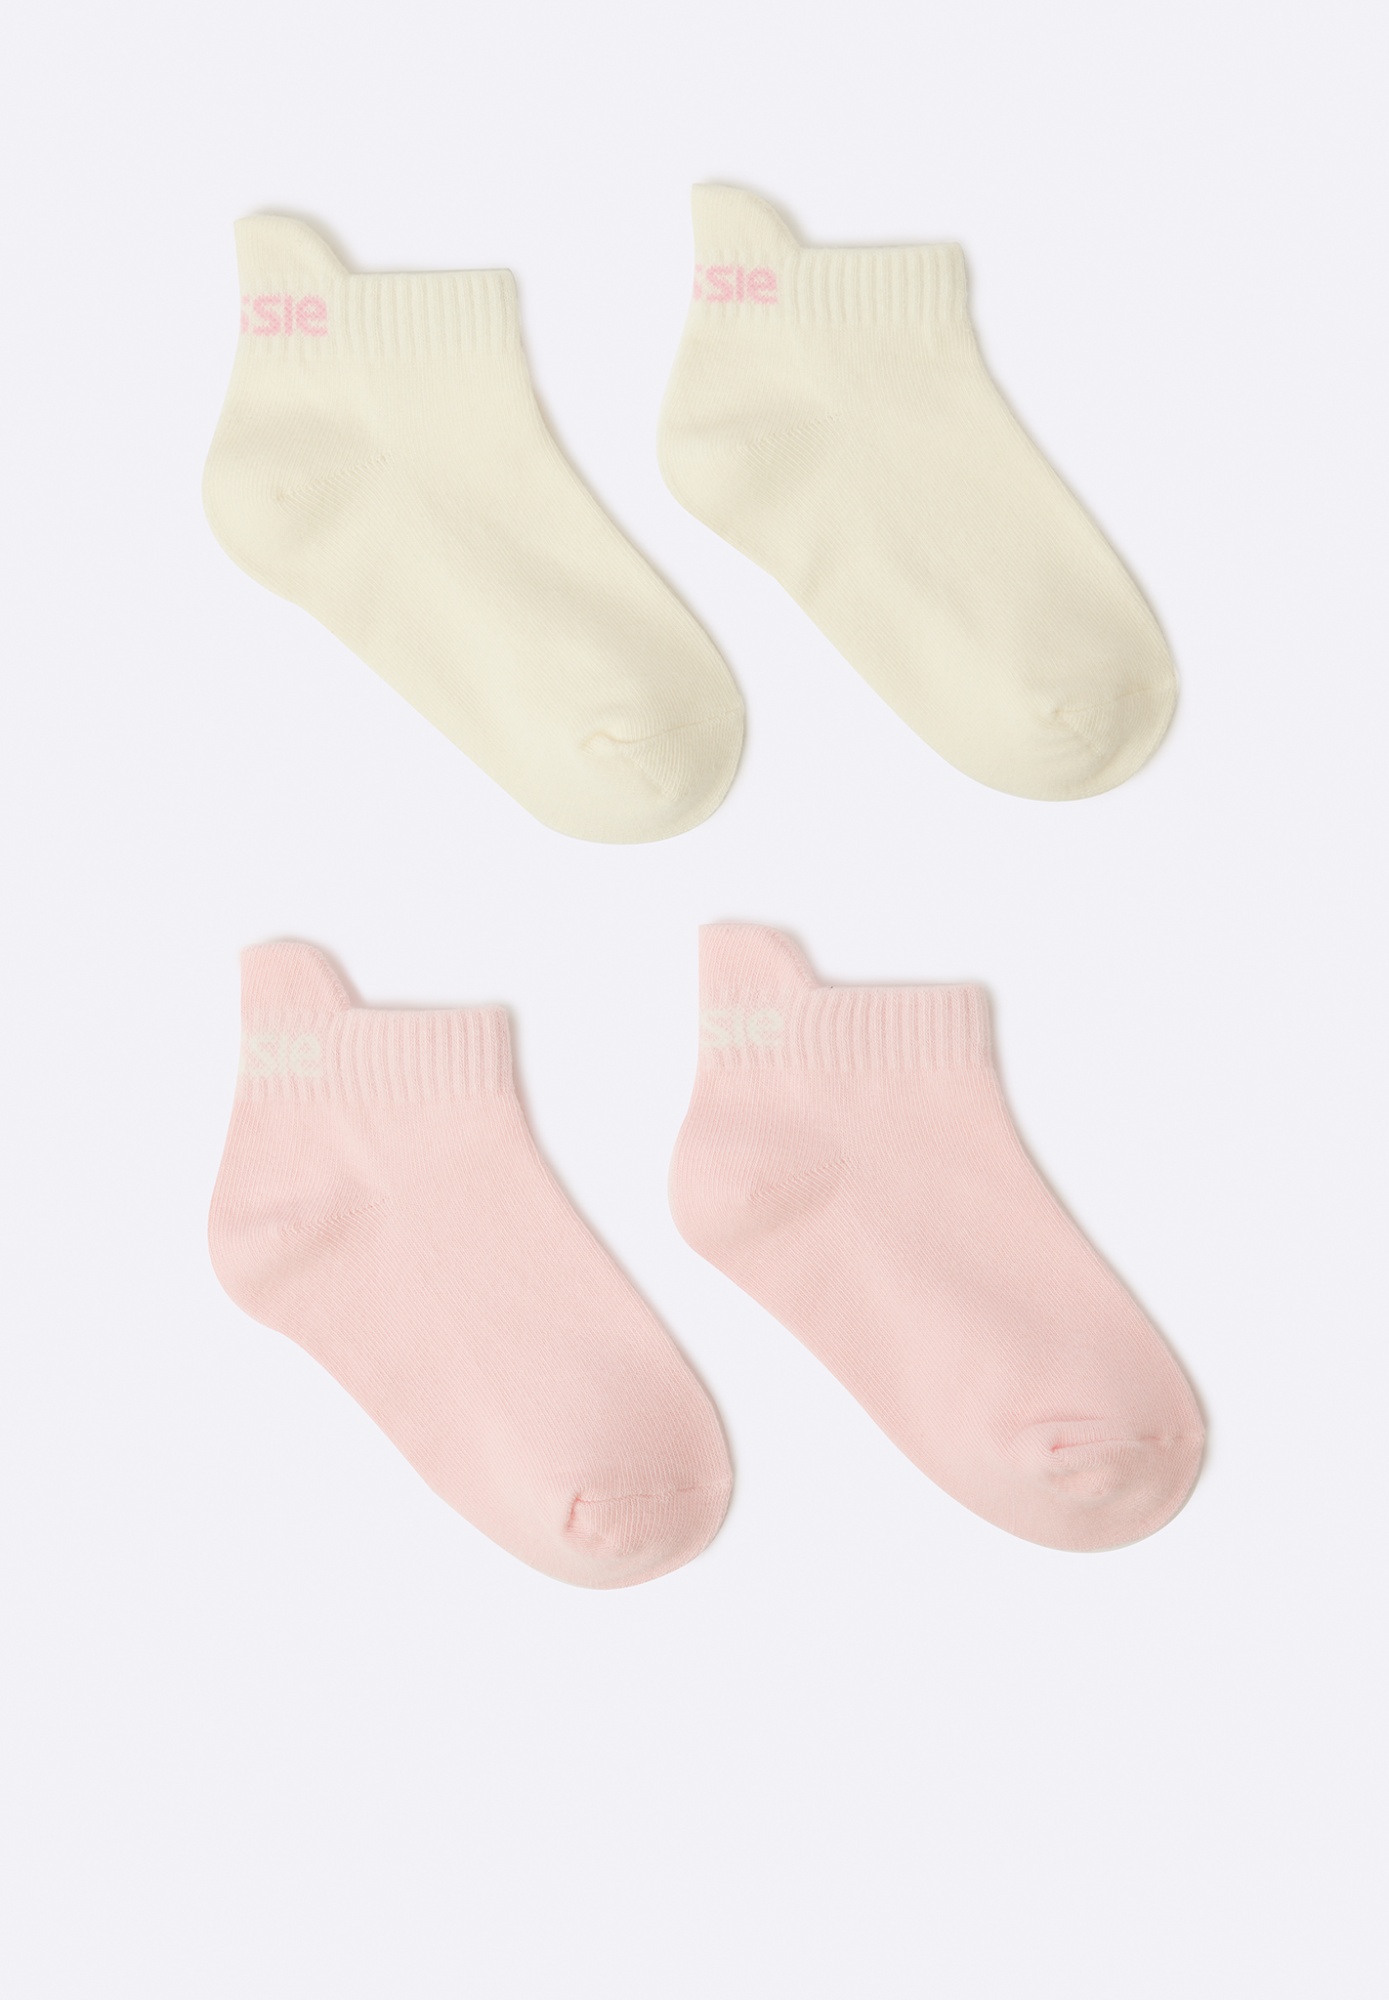 Детские носки Lassie Vipellys, 2 пары Белые | фото